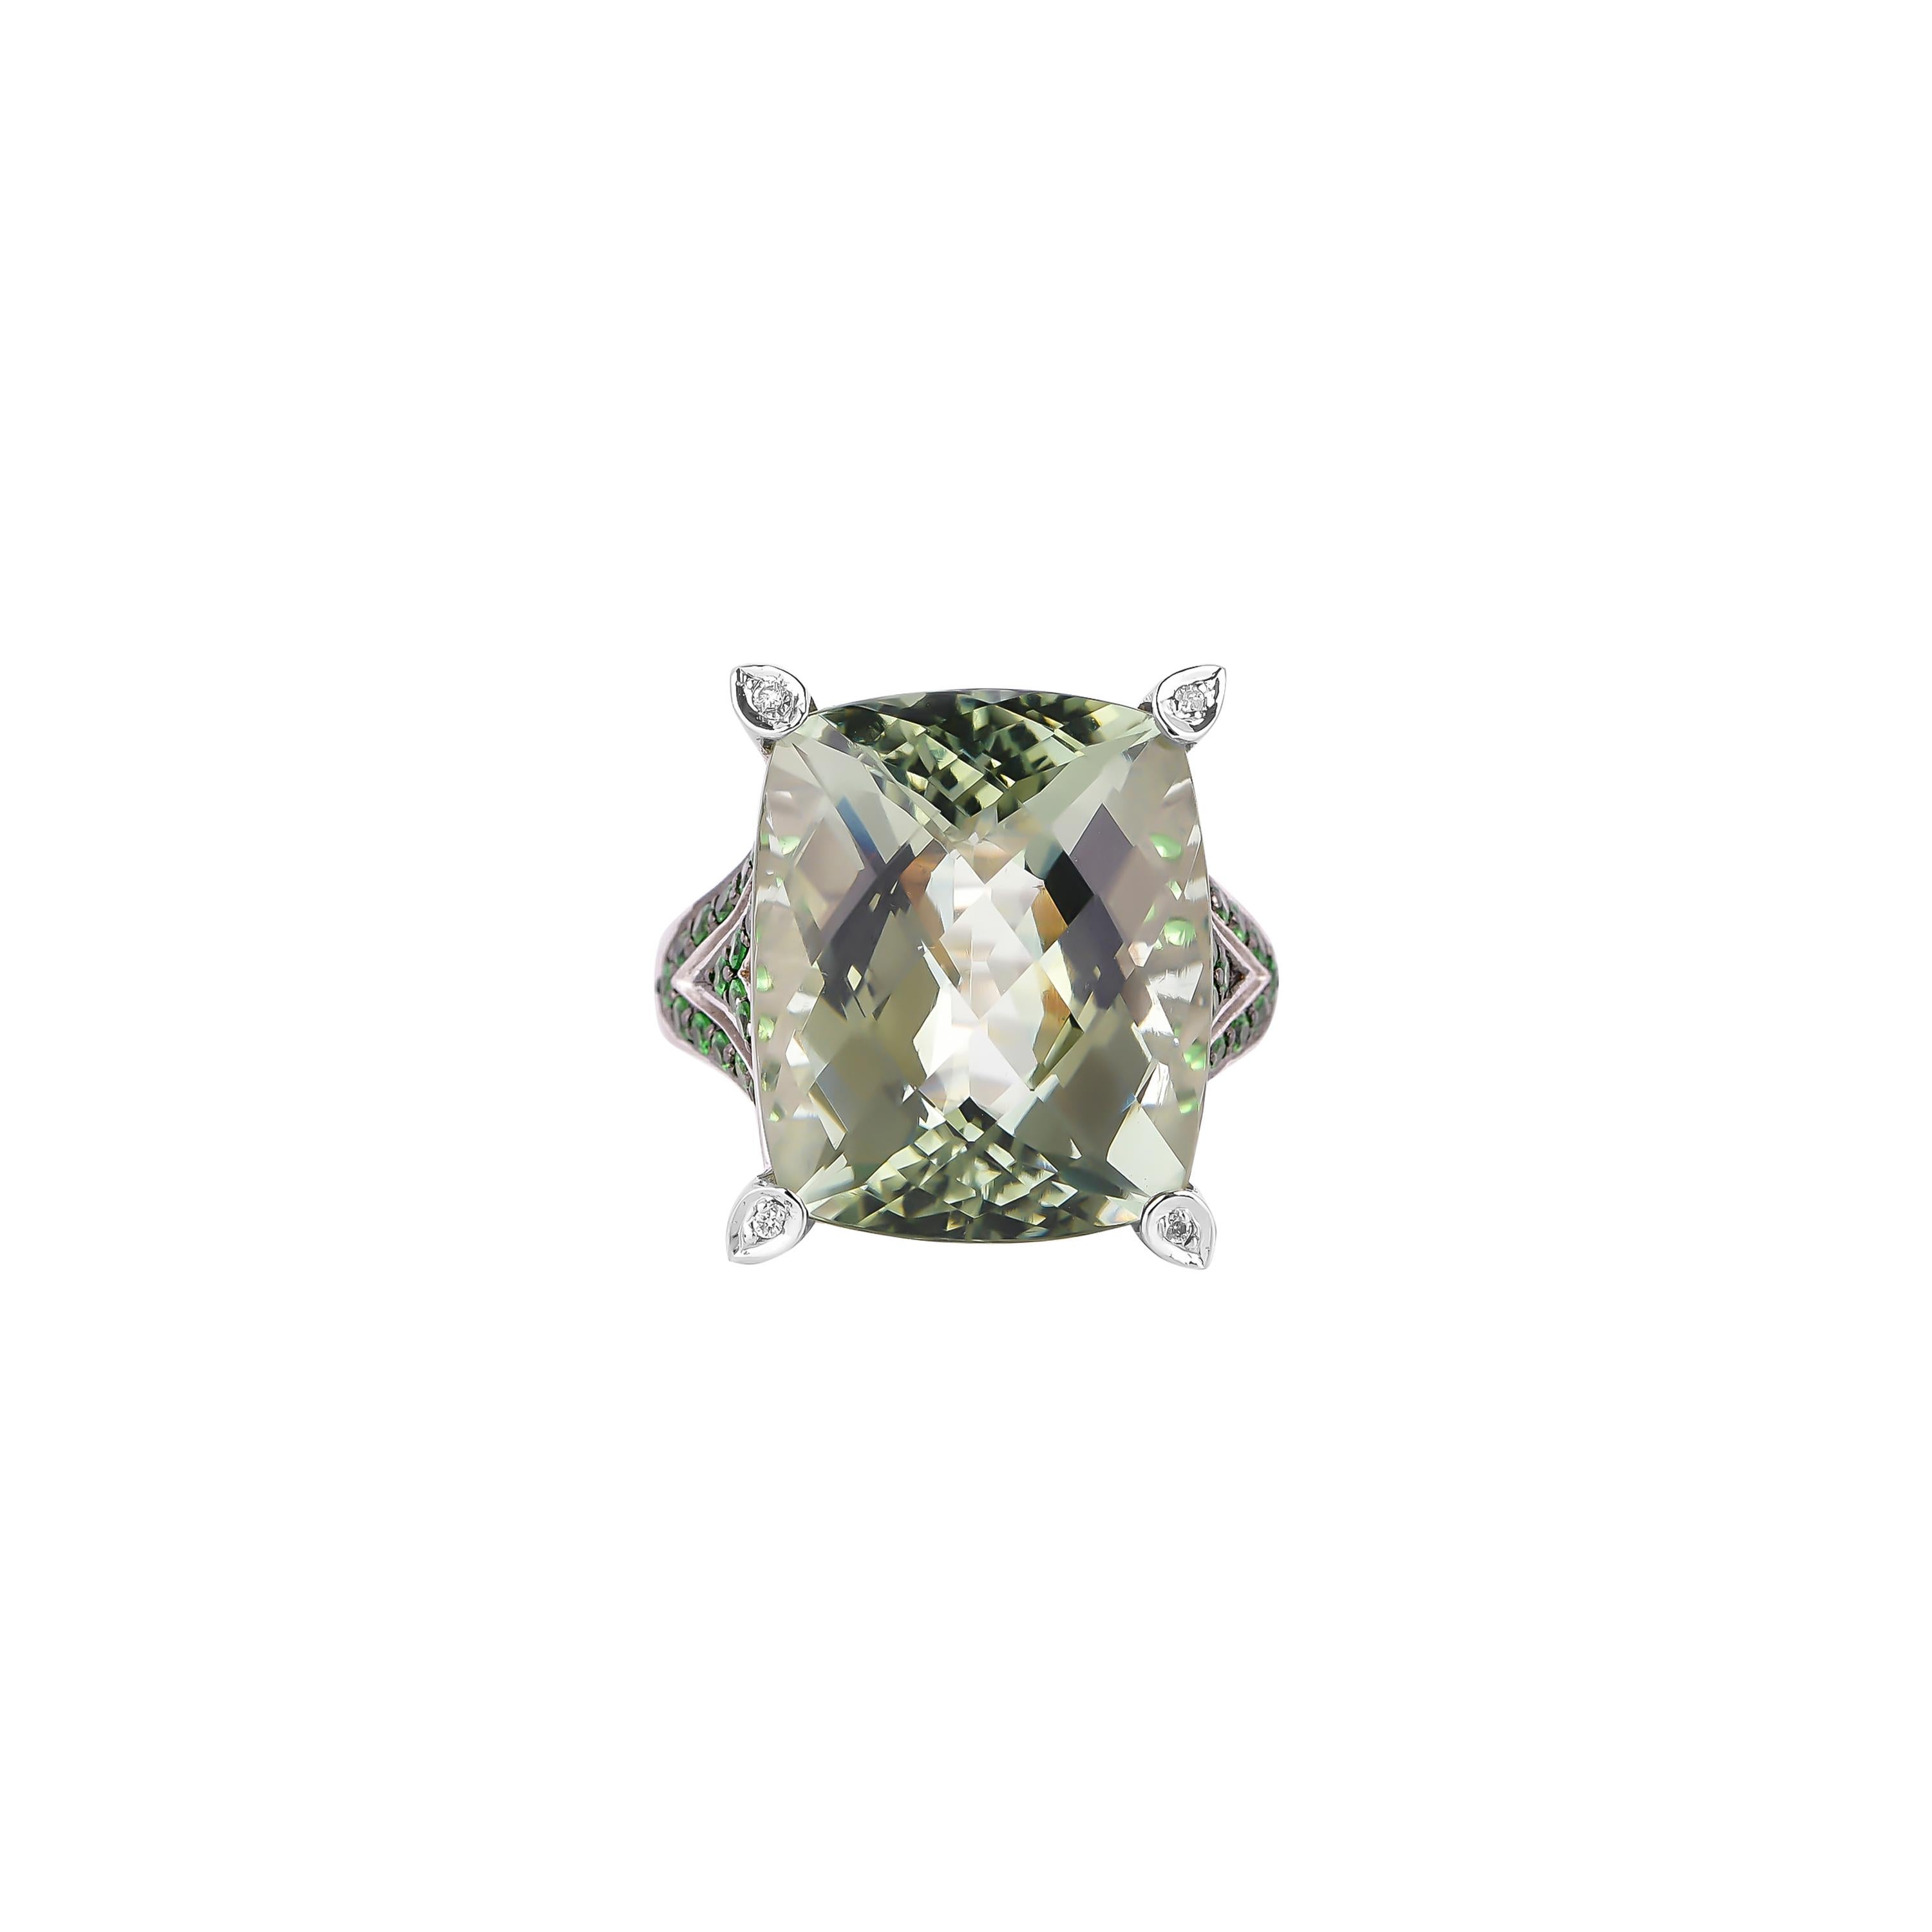 Cushion Cut 23 Carat Green Amethyst, Tsavorite and Diamond Ring in 14 Karat White Gold